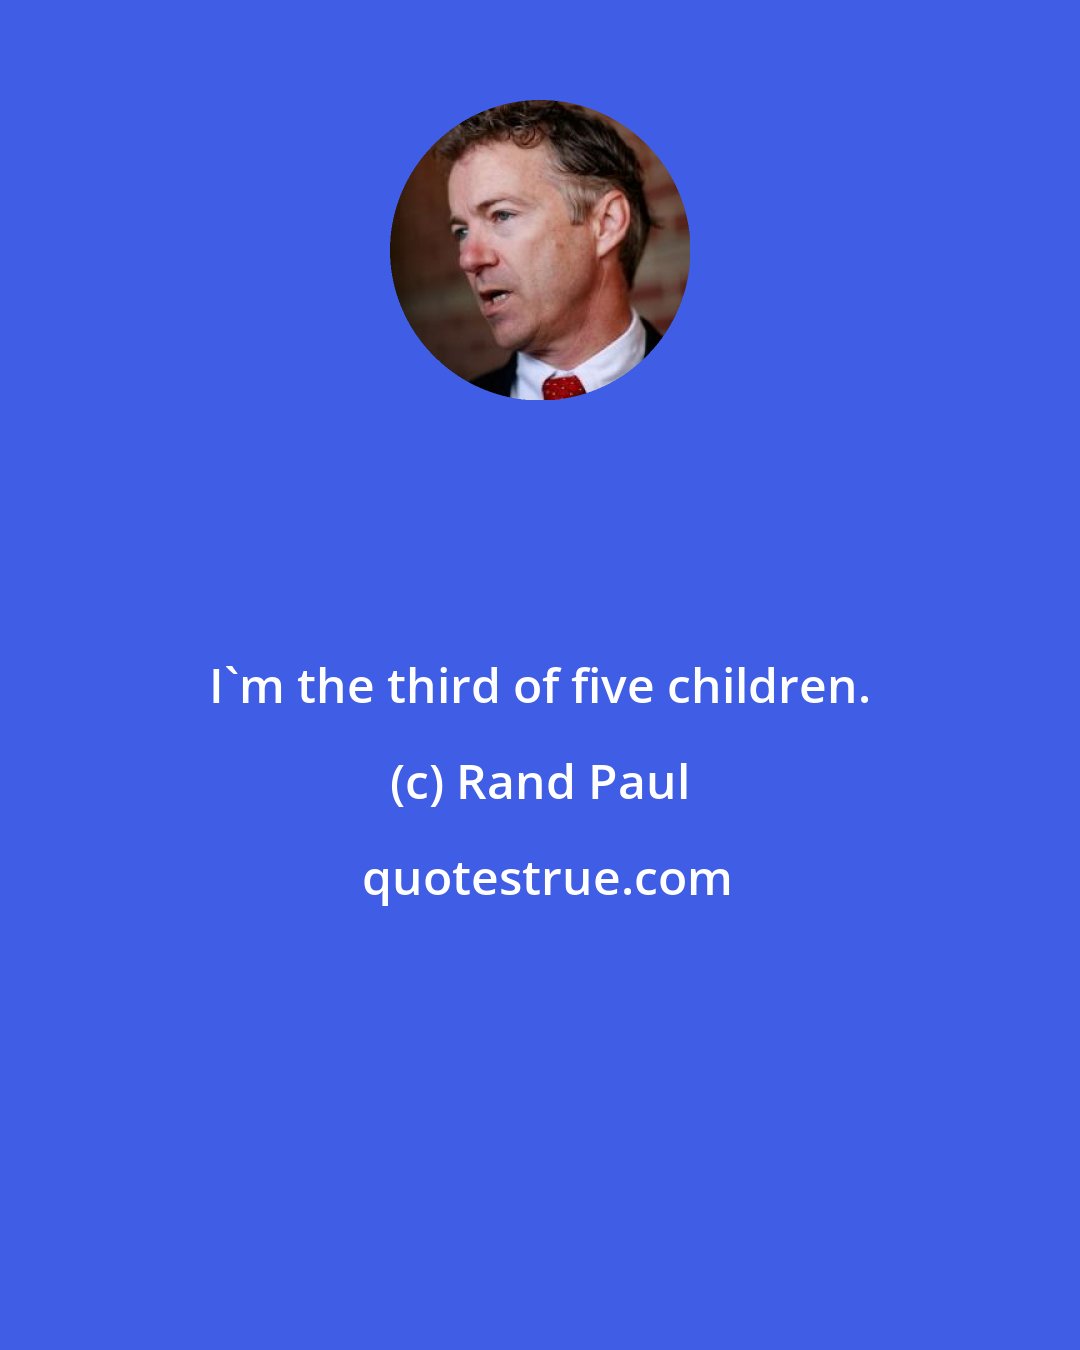 Rand Paul: I'm the third of five children.